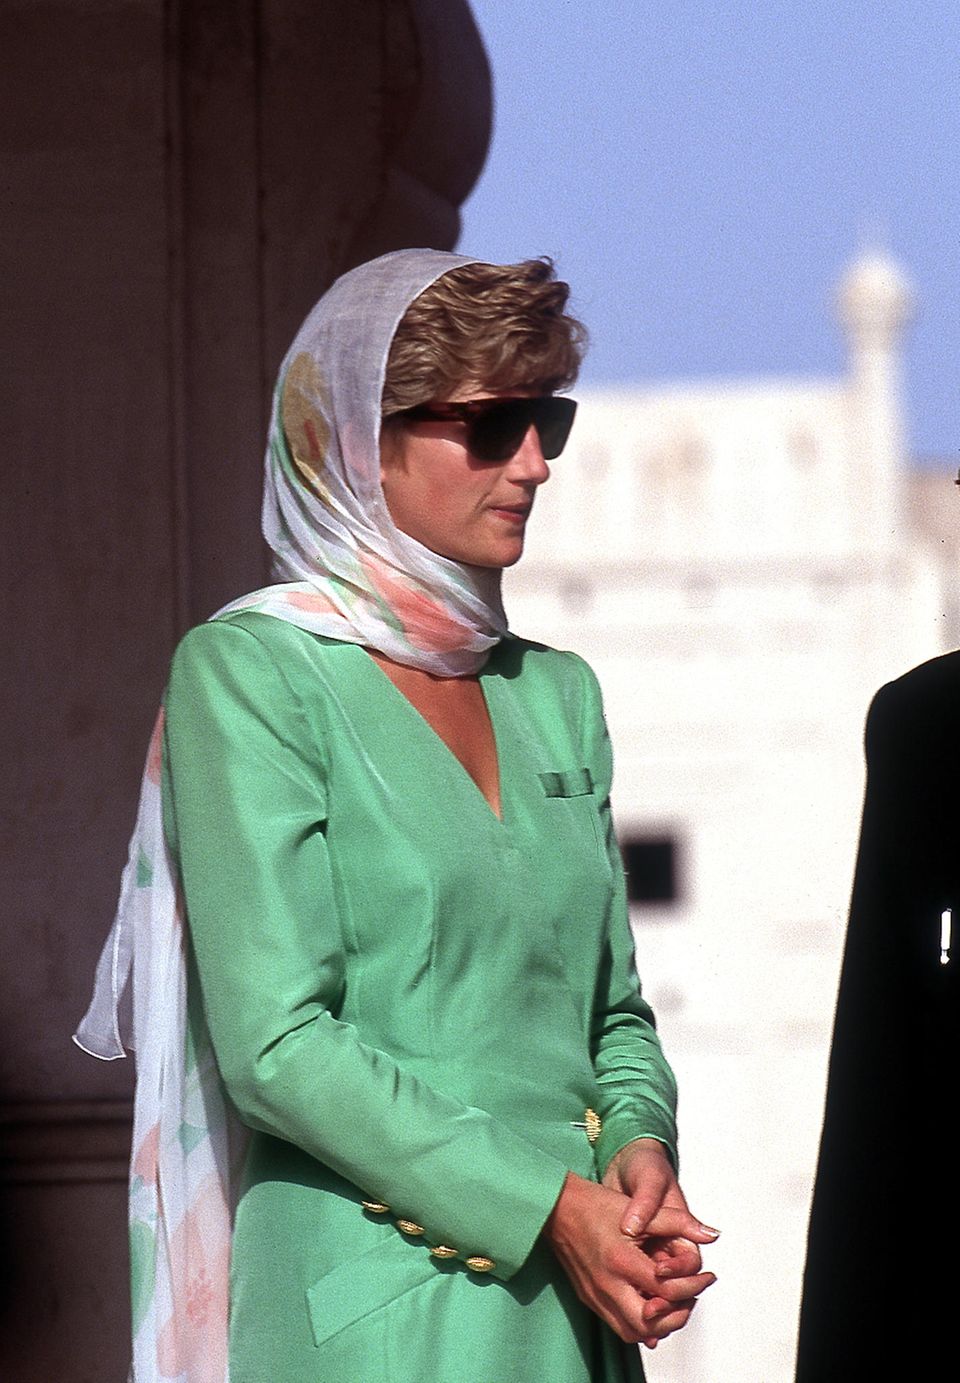 Lady Dianas Looks: Prinzessin Diana mit Kopftuch